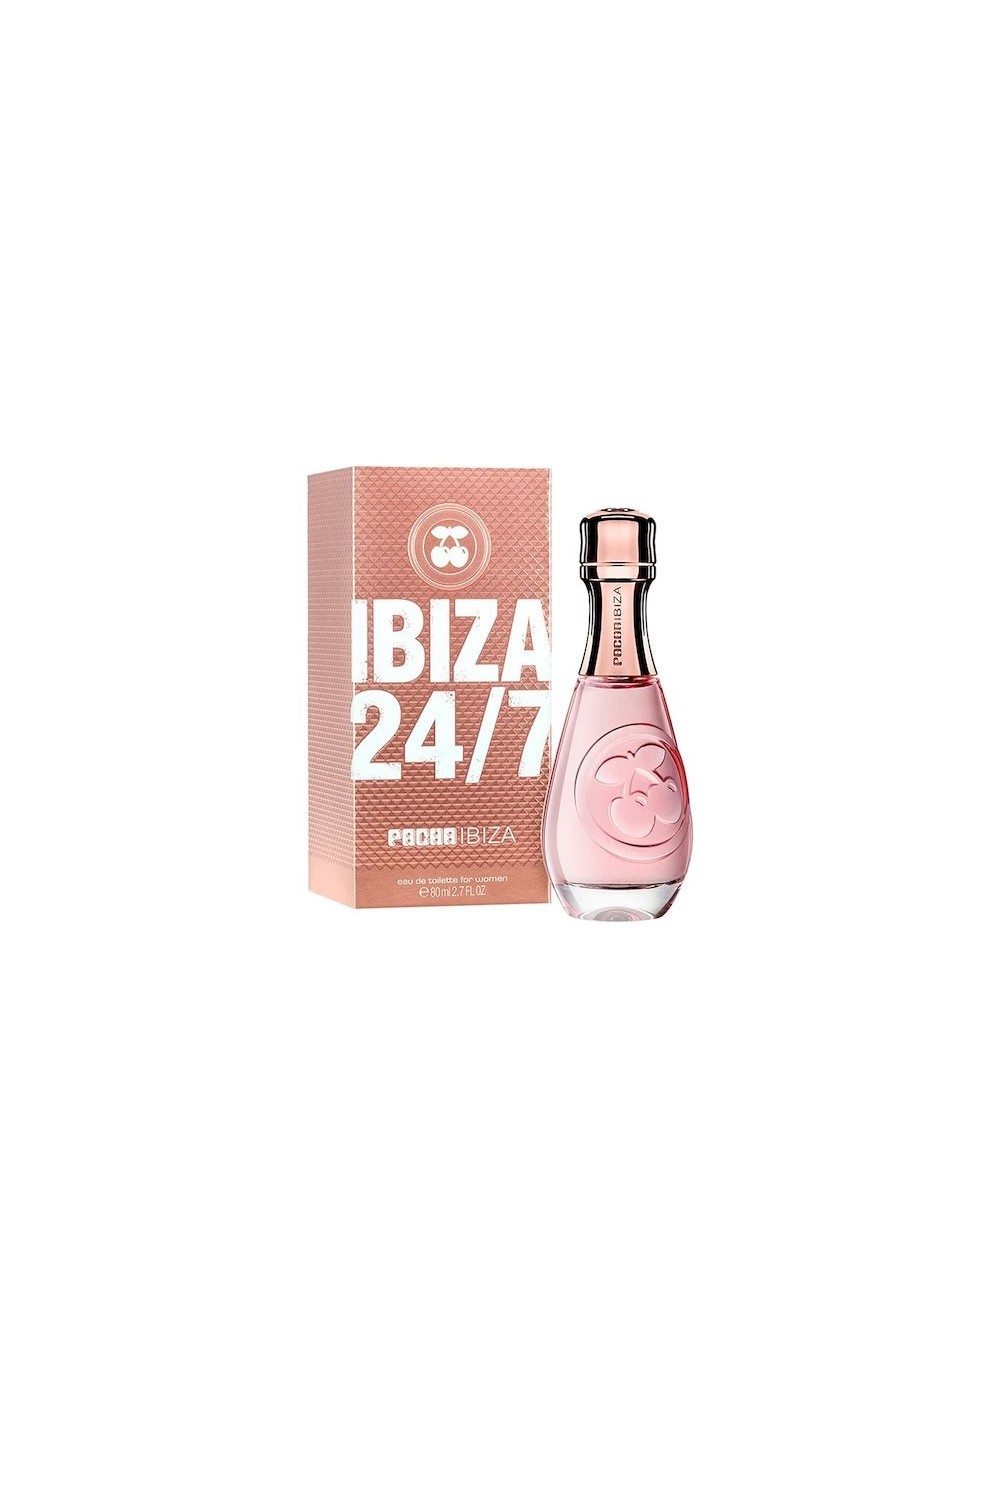 Pacha Ibiza 24/7 Woman Eau De Toilette Spray 80ml